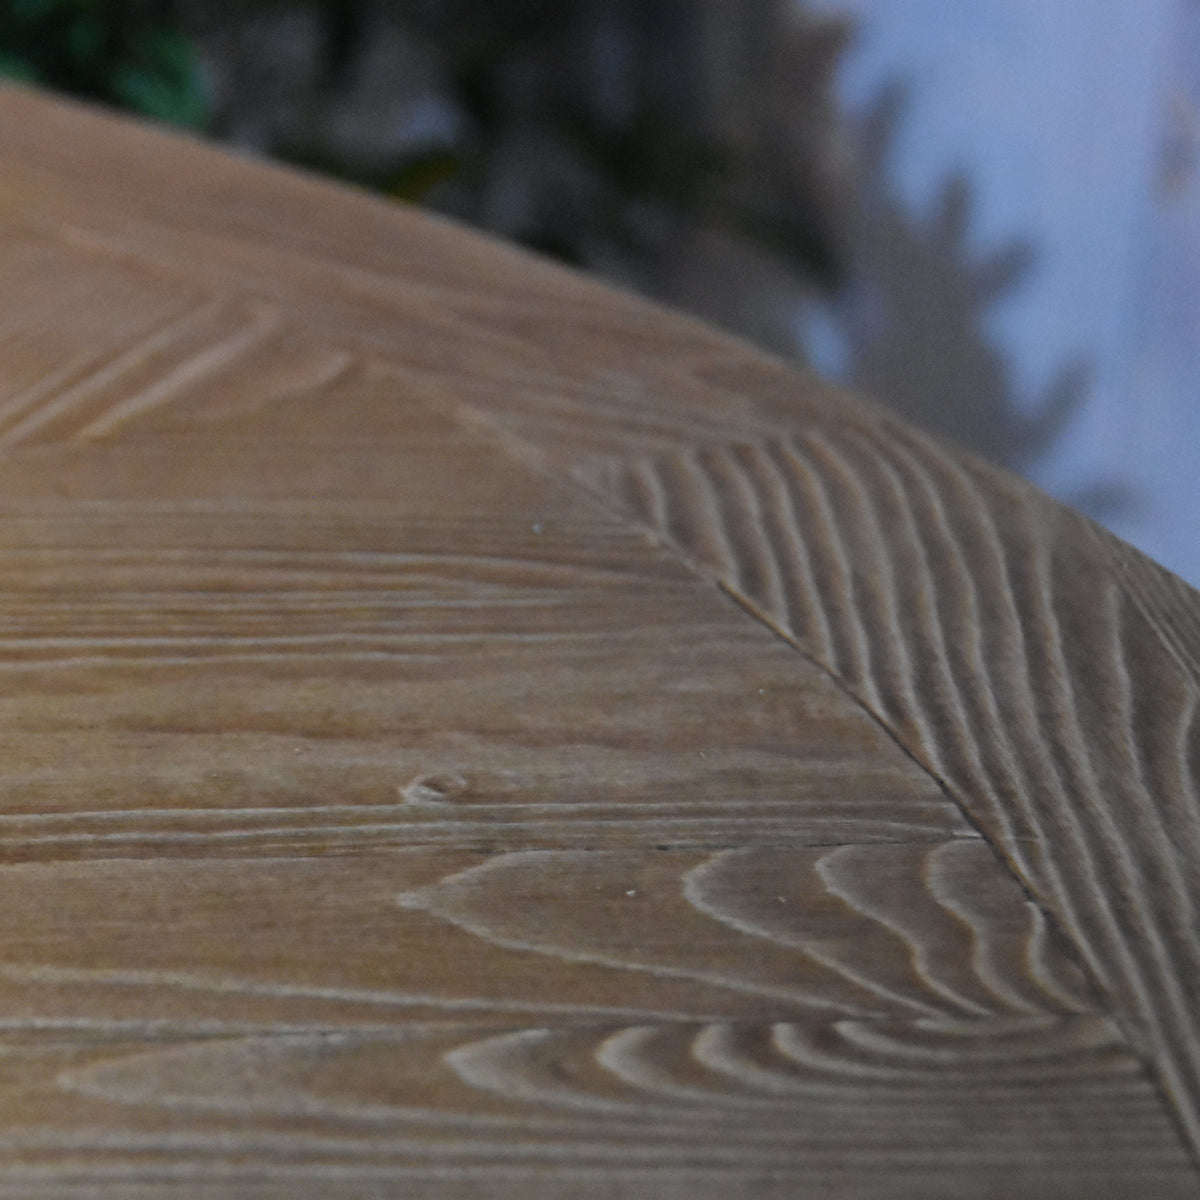 Elementi Lafite Barrel Fire Table in Redwood showing wood grain texture